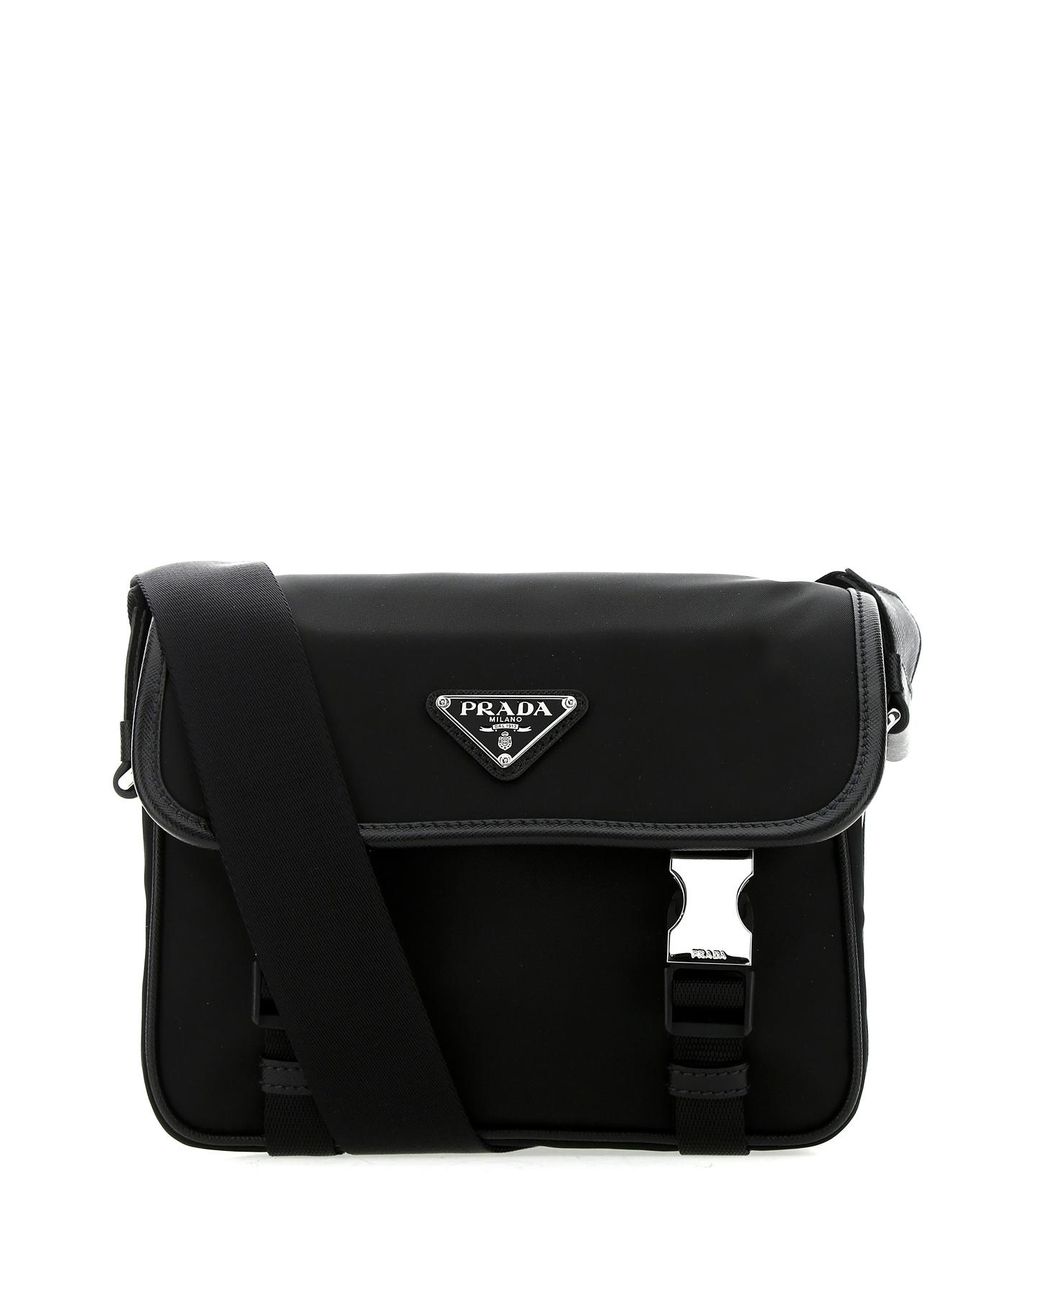 Prada Synthetic Re-nylon Crossbody Bag in Black for Men - Lyst